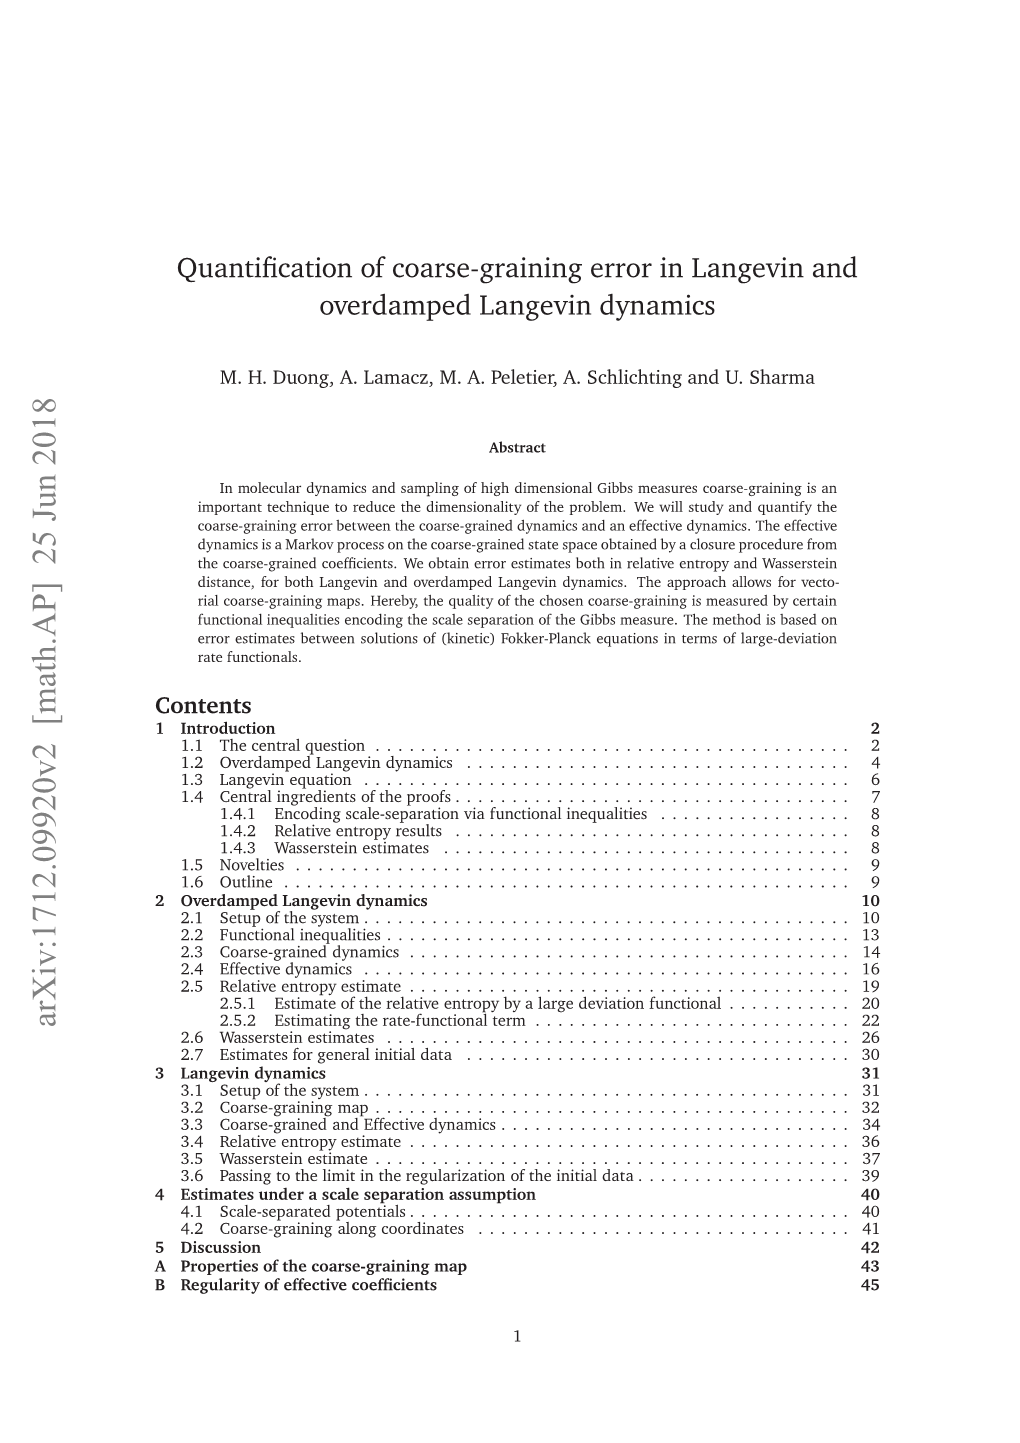 Quantification of Coarse-Graining Error in Langevin and Overdamped Langevin Dynamics